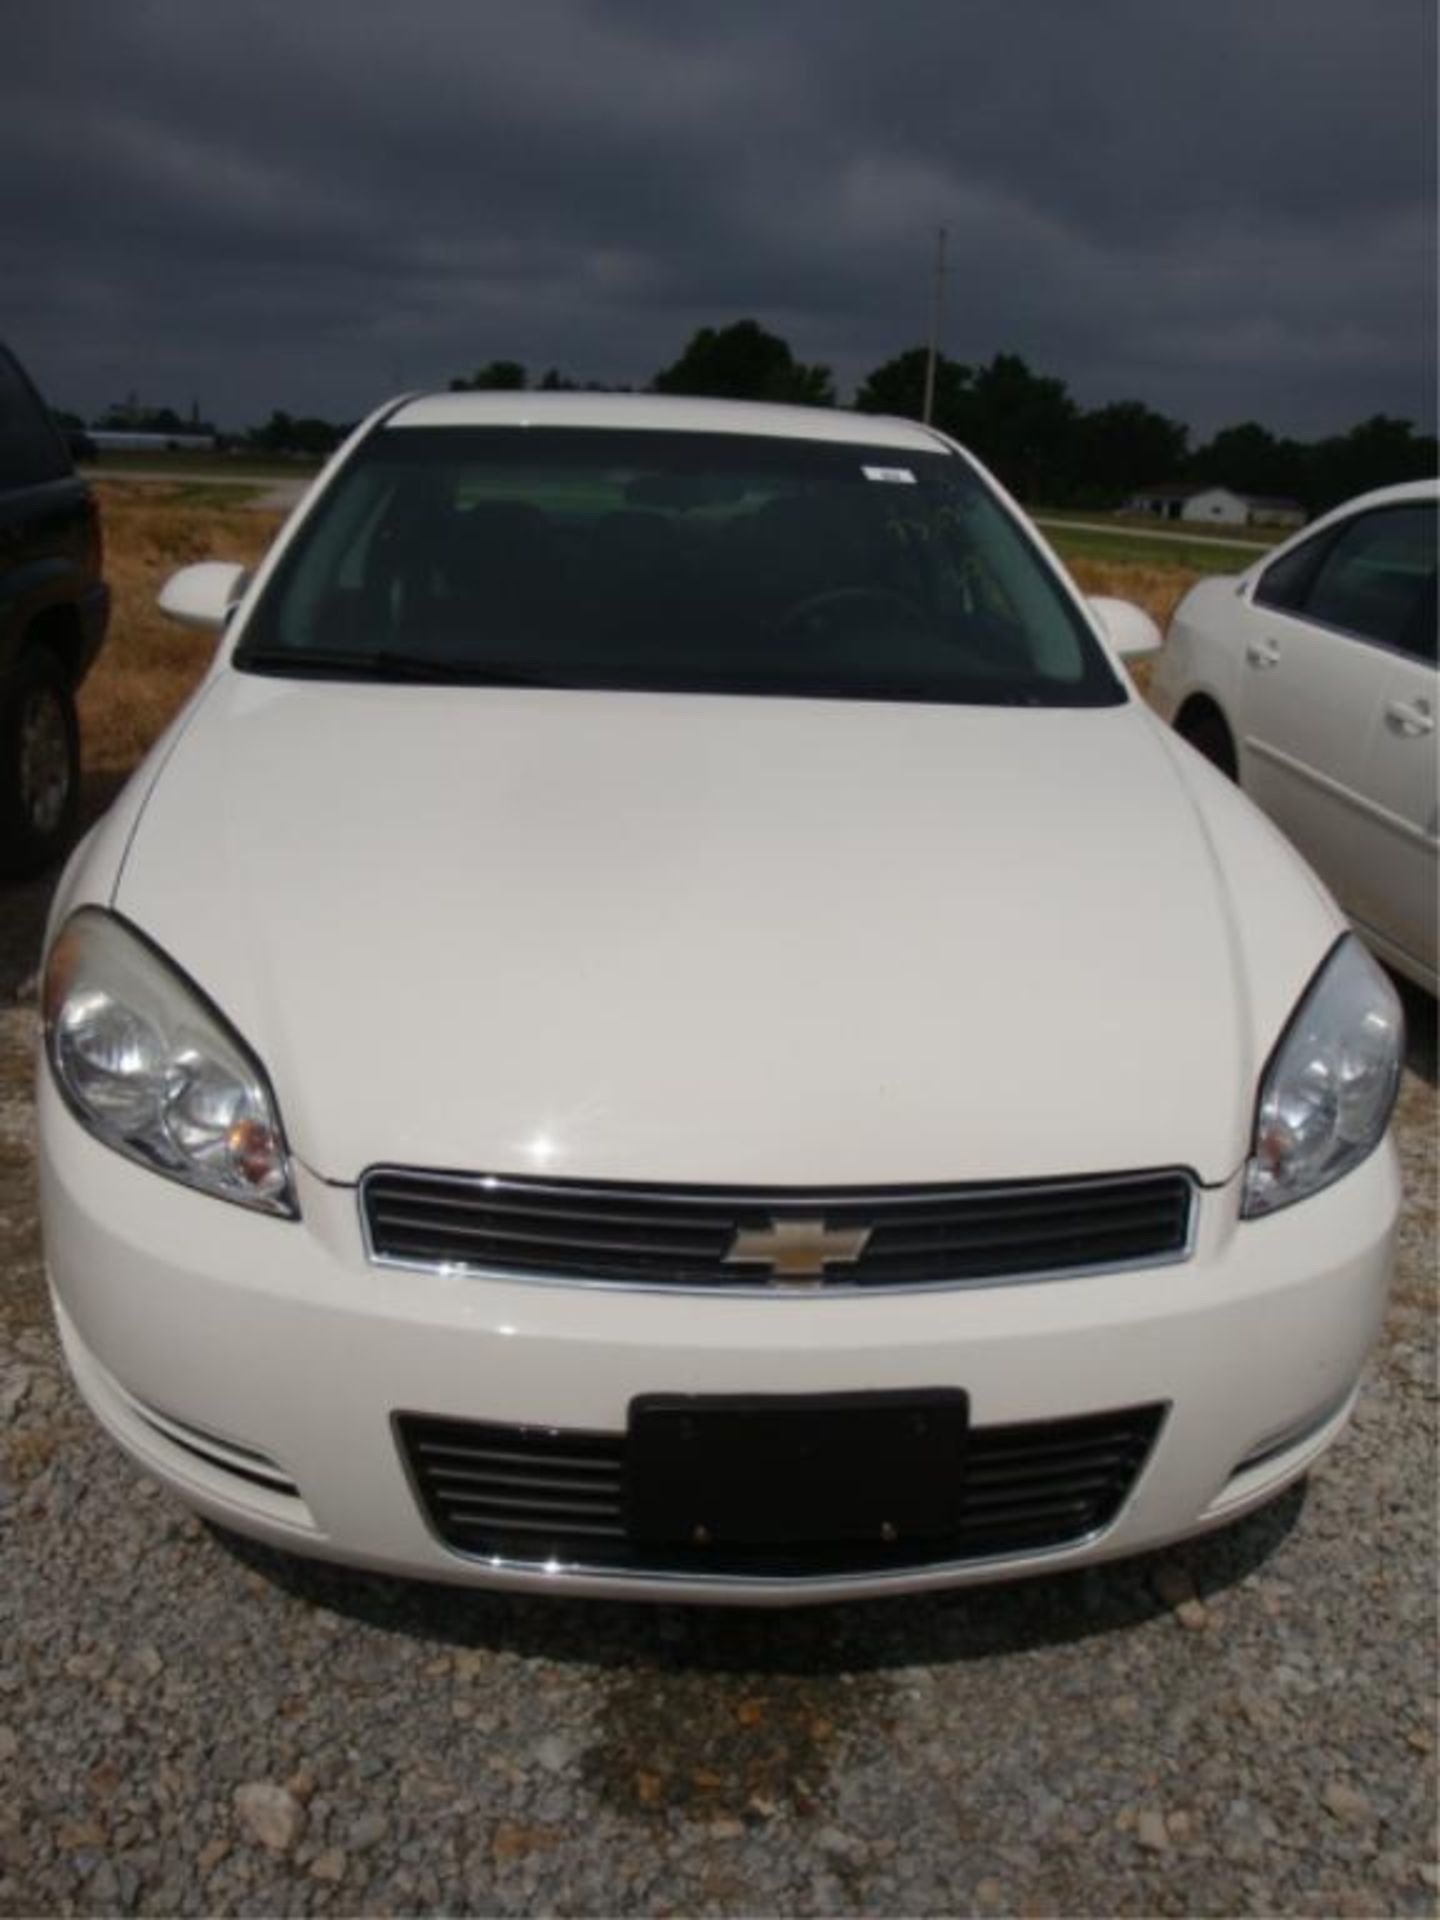 (Title) 2007 Chevrolet Impala 4 door, 3900 V6,73,036 mi. vin 2G1WS55R979417943 - Image 3 of 10